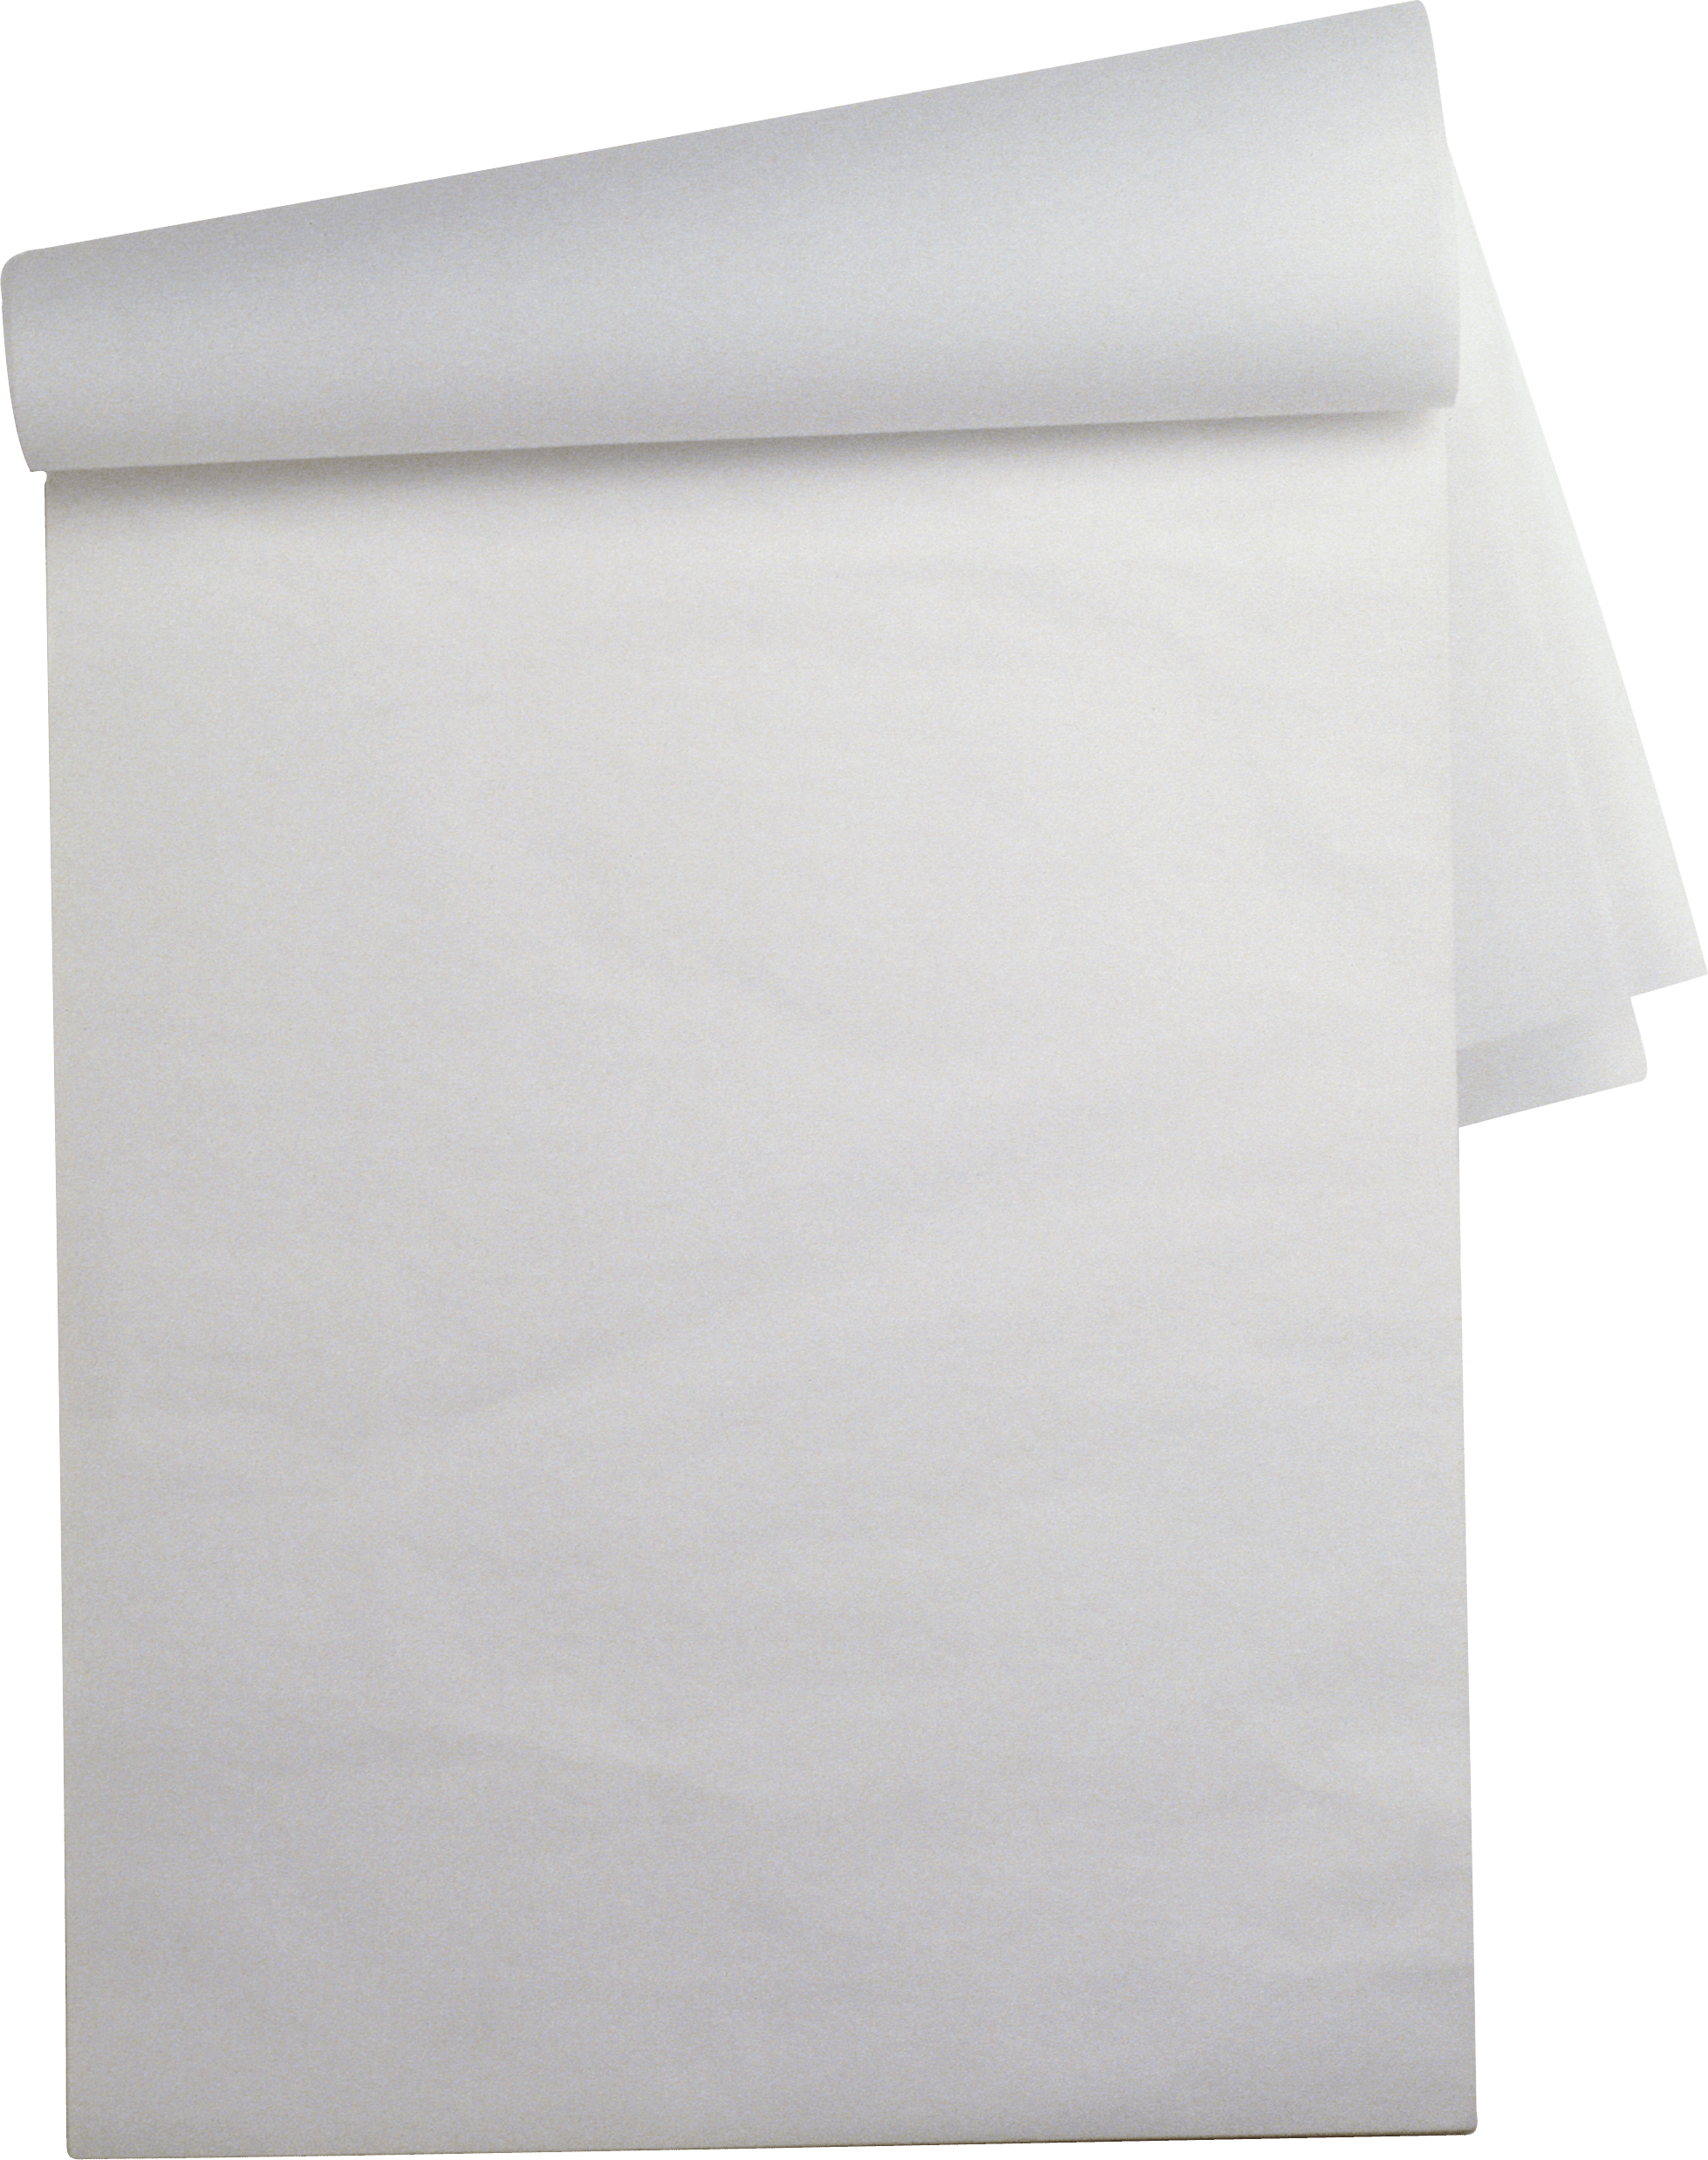 Paper Sheet Png Image PNG Image